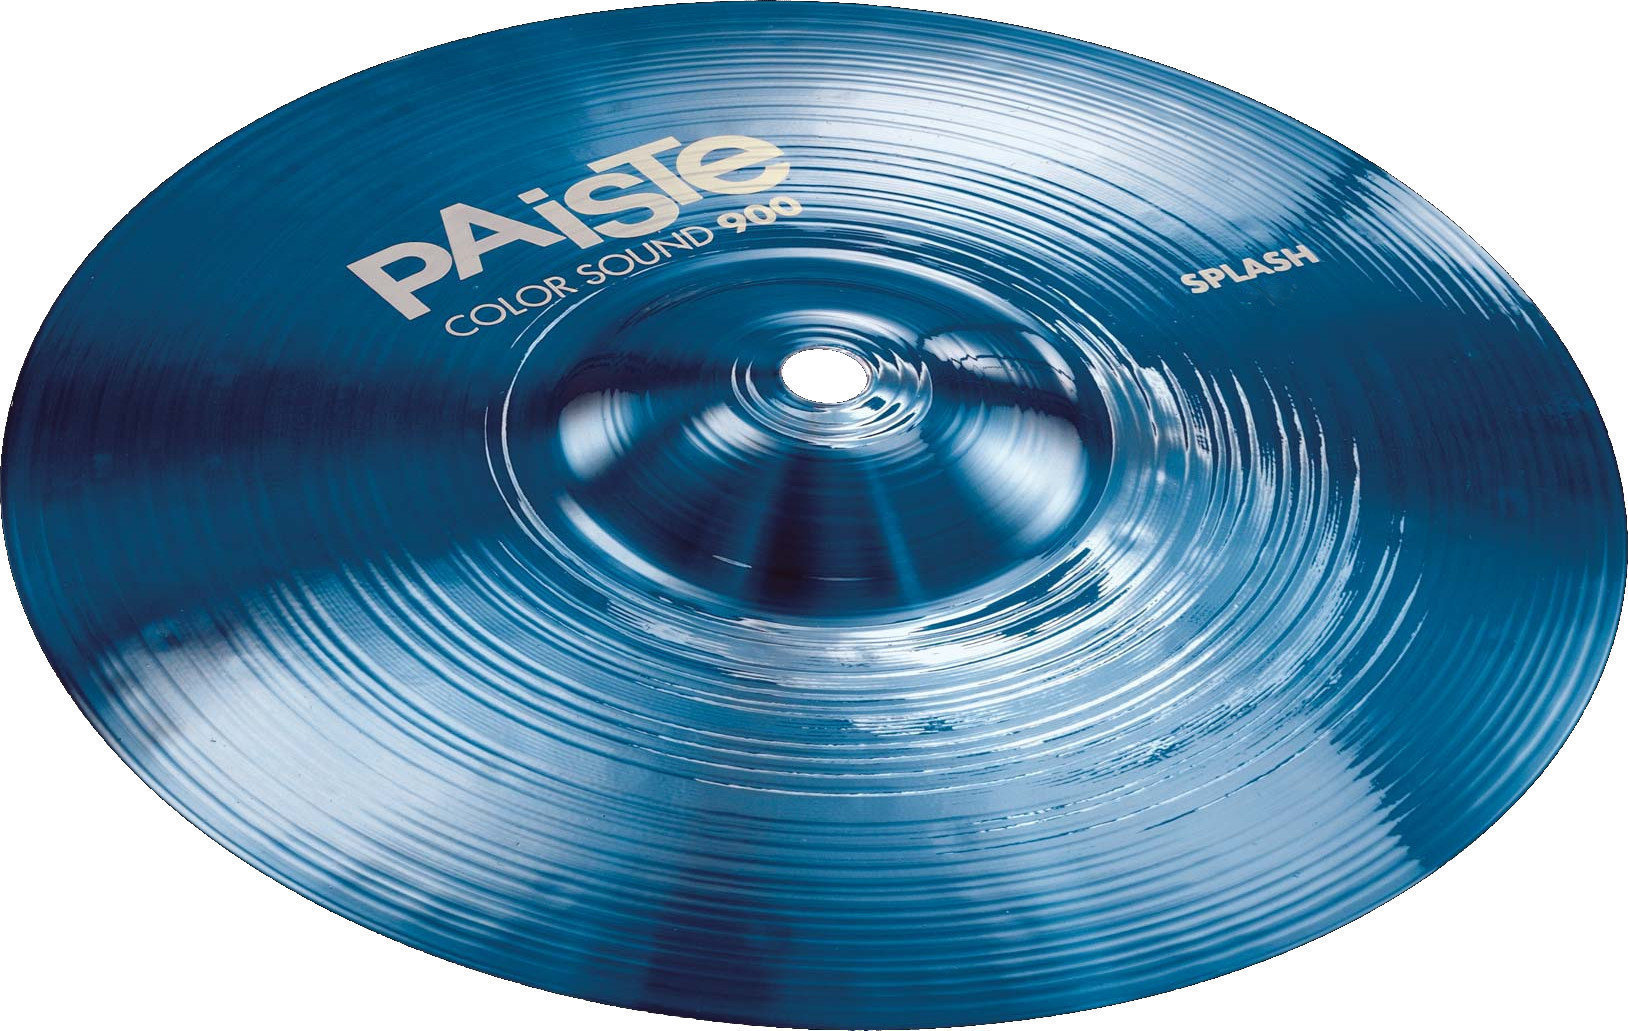 Splash Cymbal Paiste Color Sound 900 Splash Cymbal 12" Blue